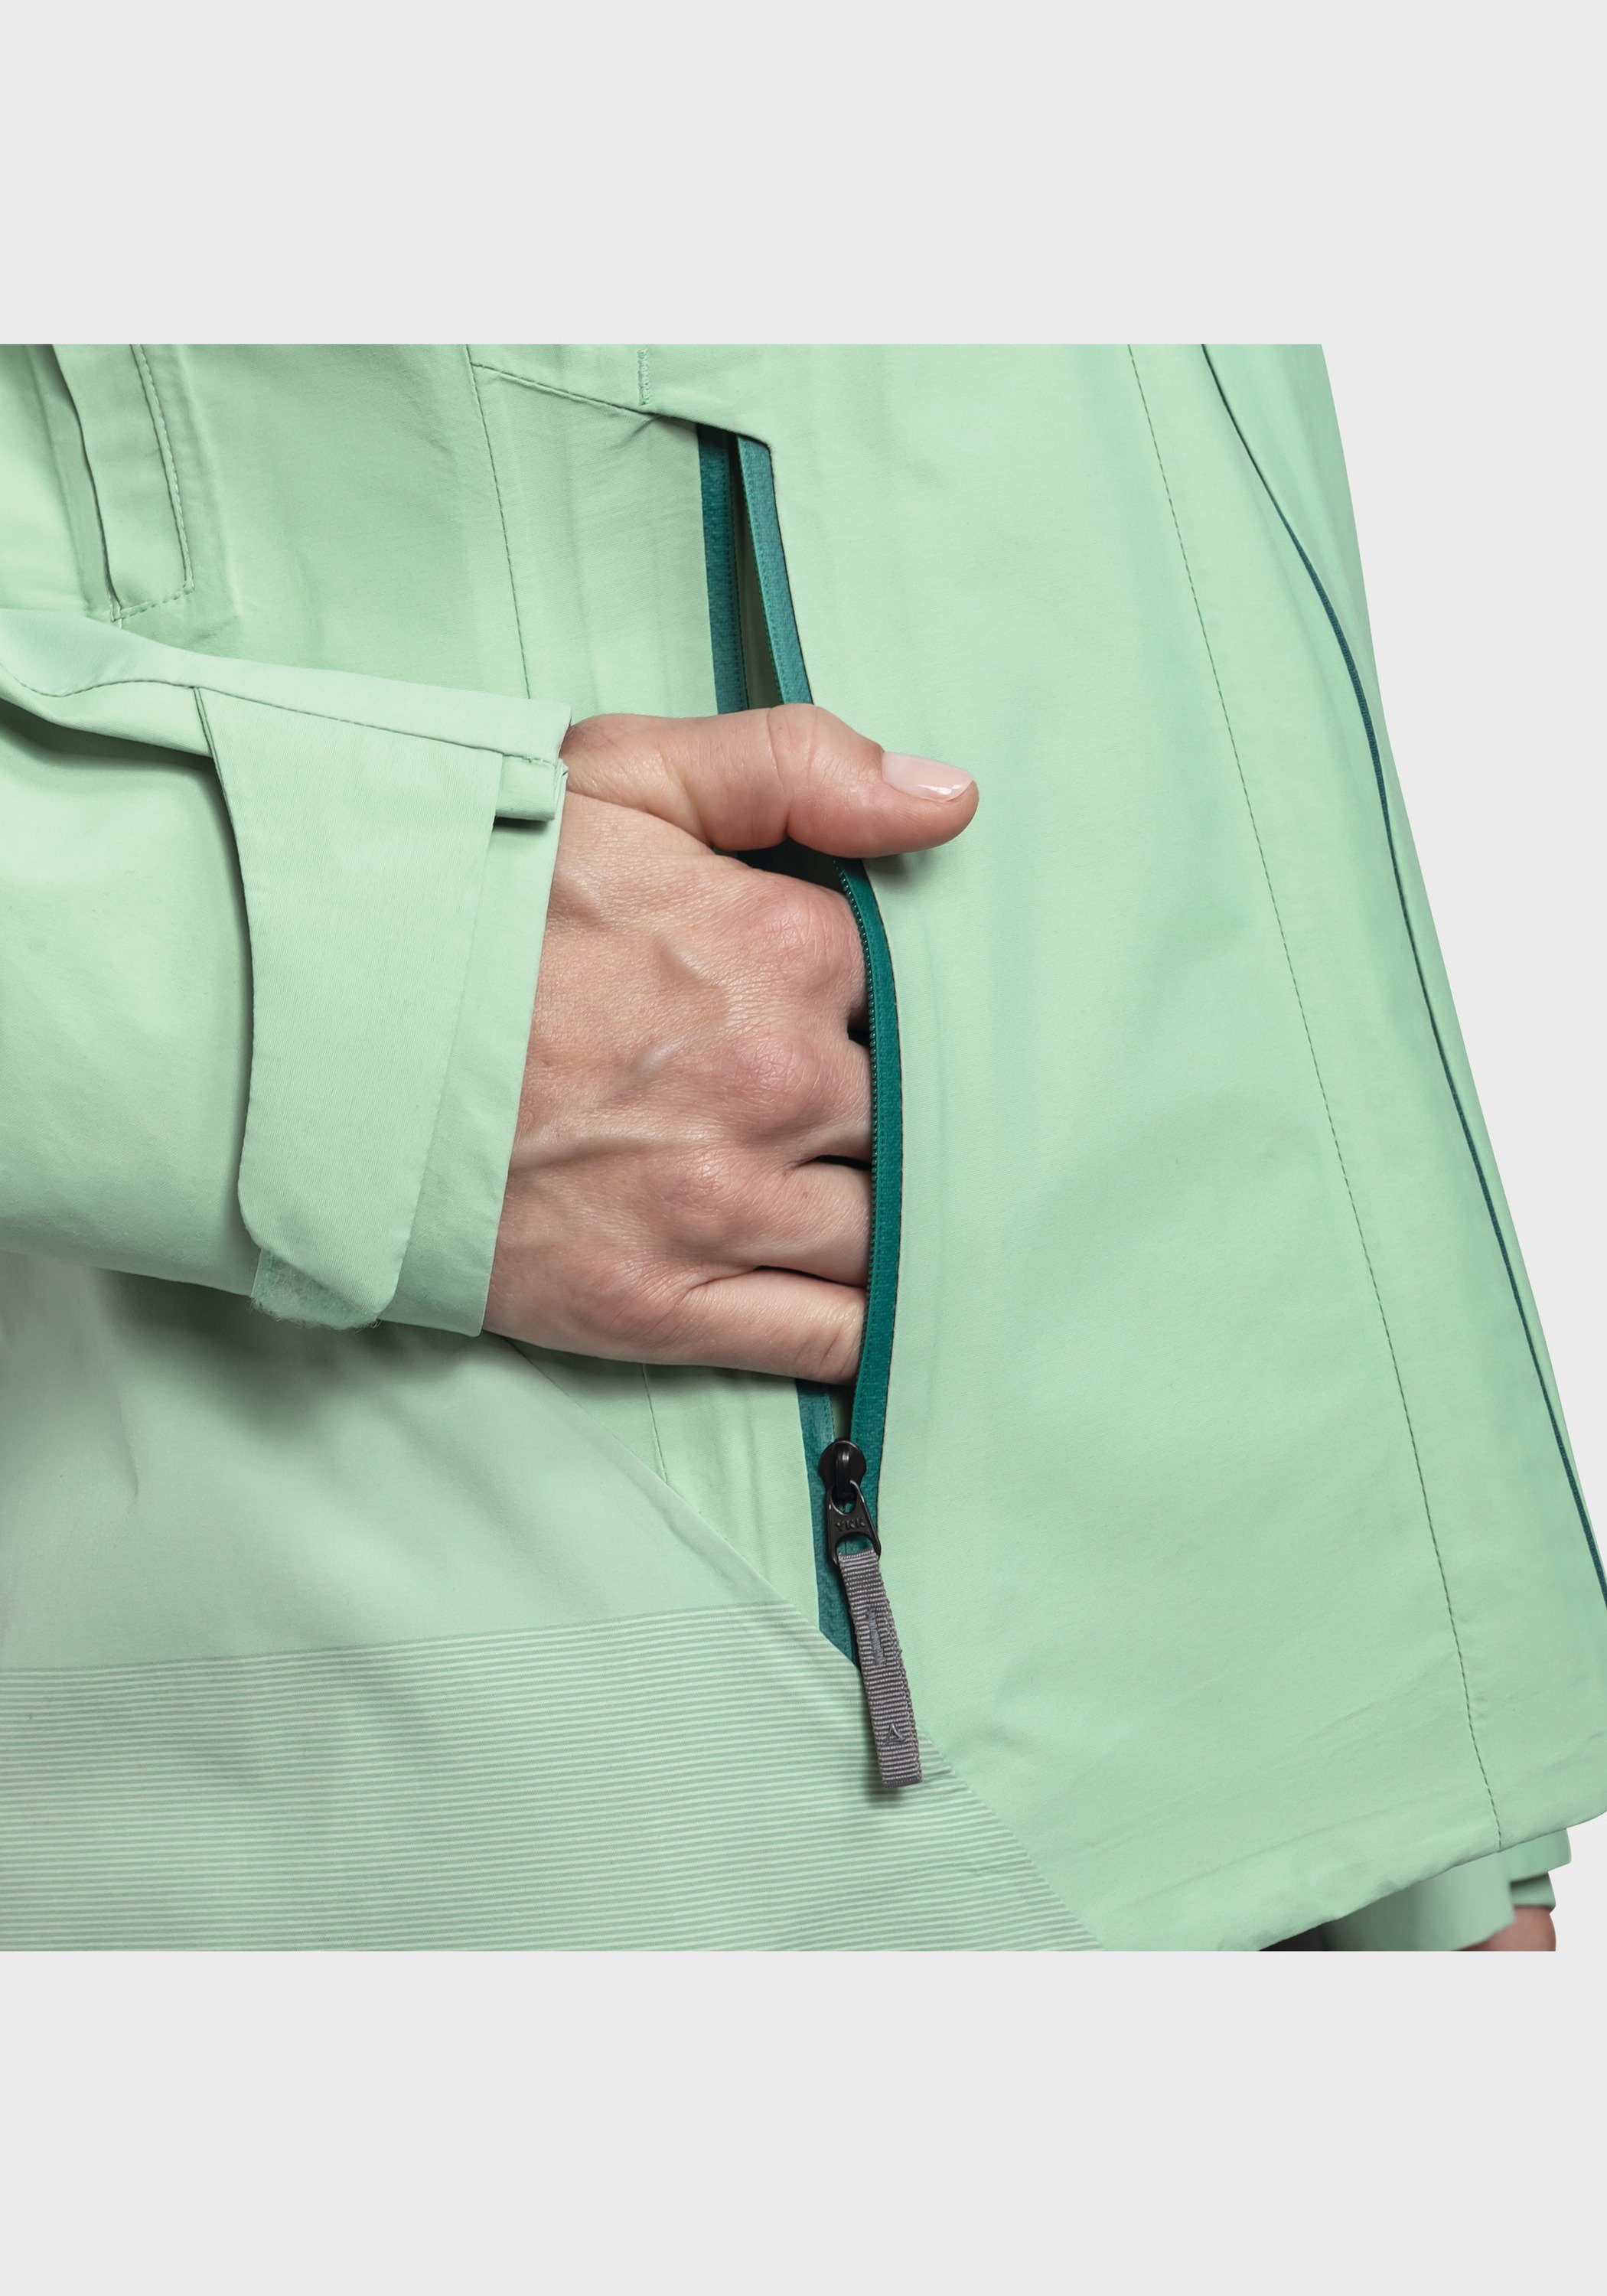 Schöffel Outdoorjacke 2.5L Jacket grün Triigi L